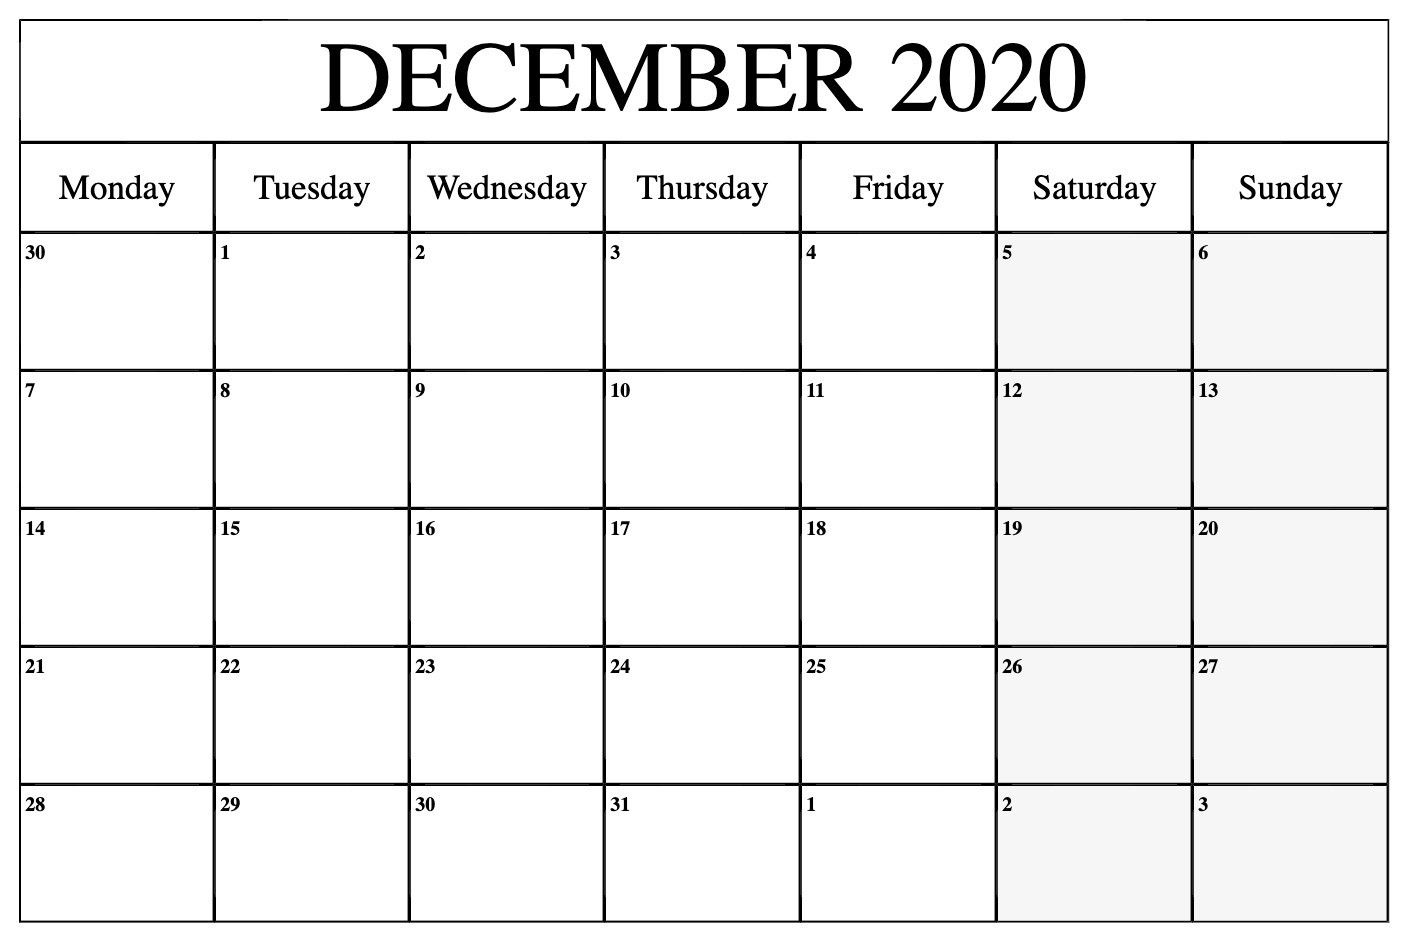 December 2021 Calendar With Holidays India